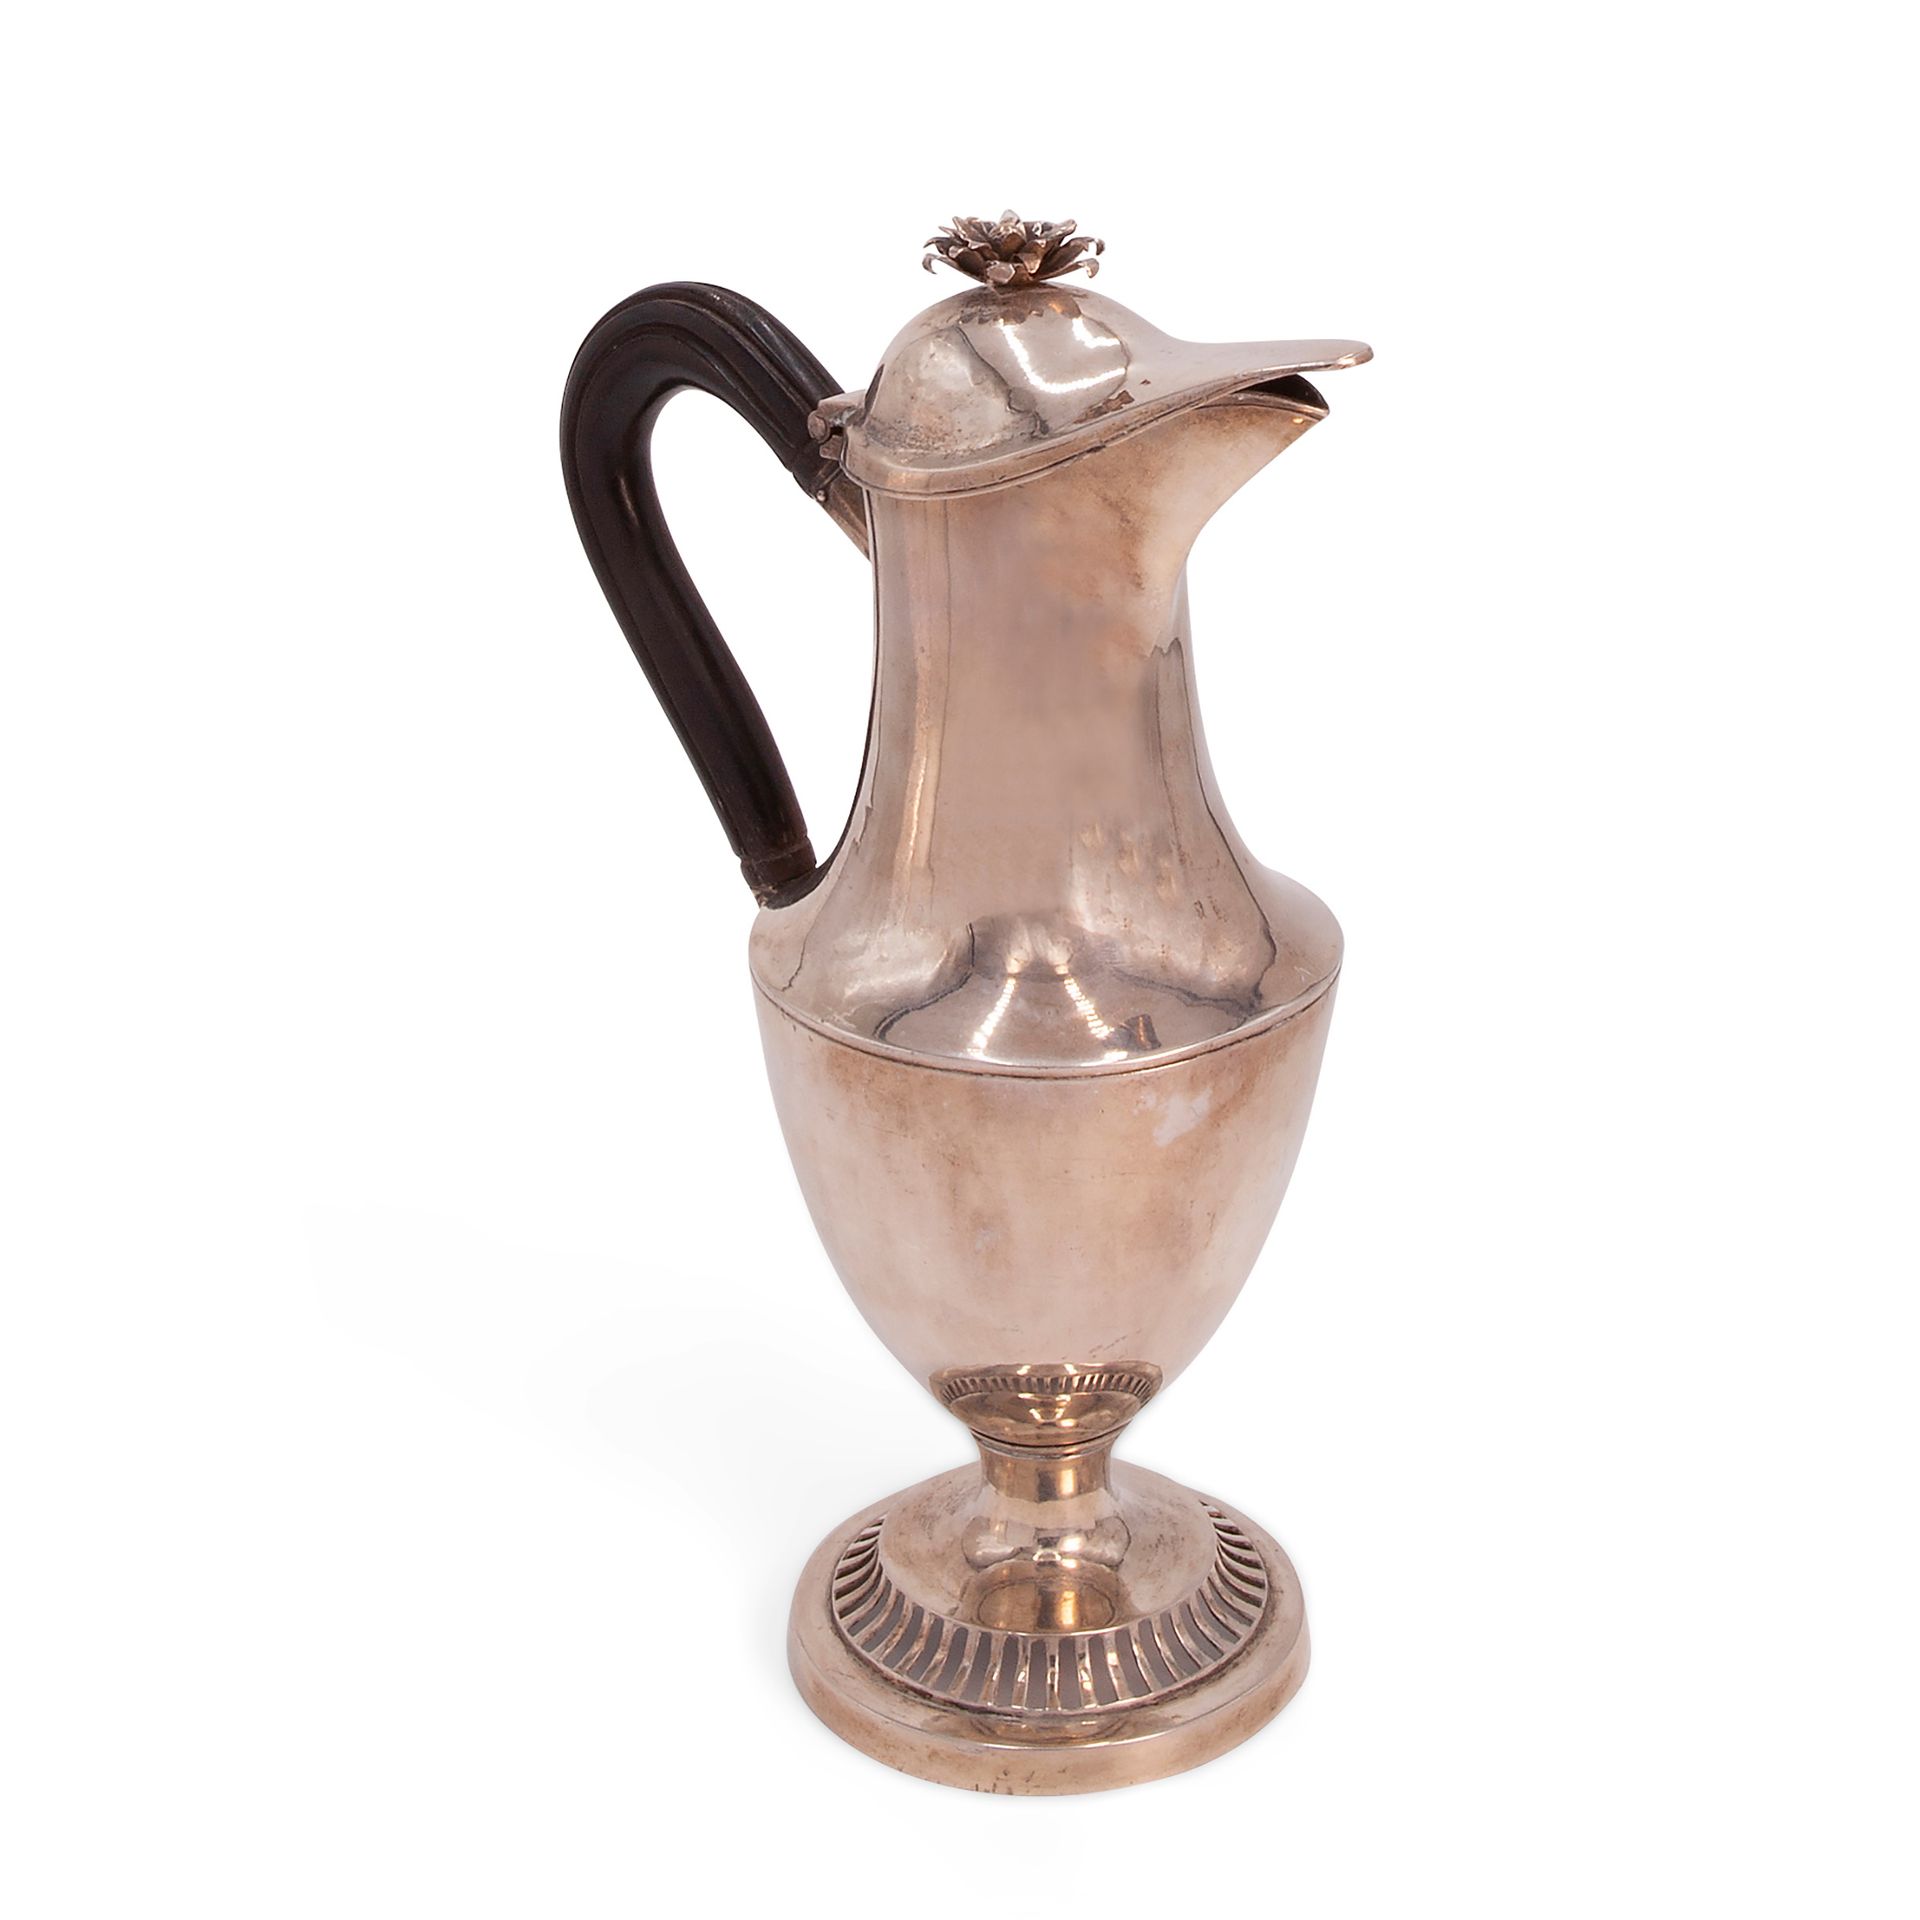 Silver jug, Germany late 18th century 总重量15.1盎司，9x6.2x3.1英寸。